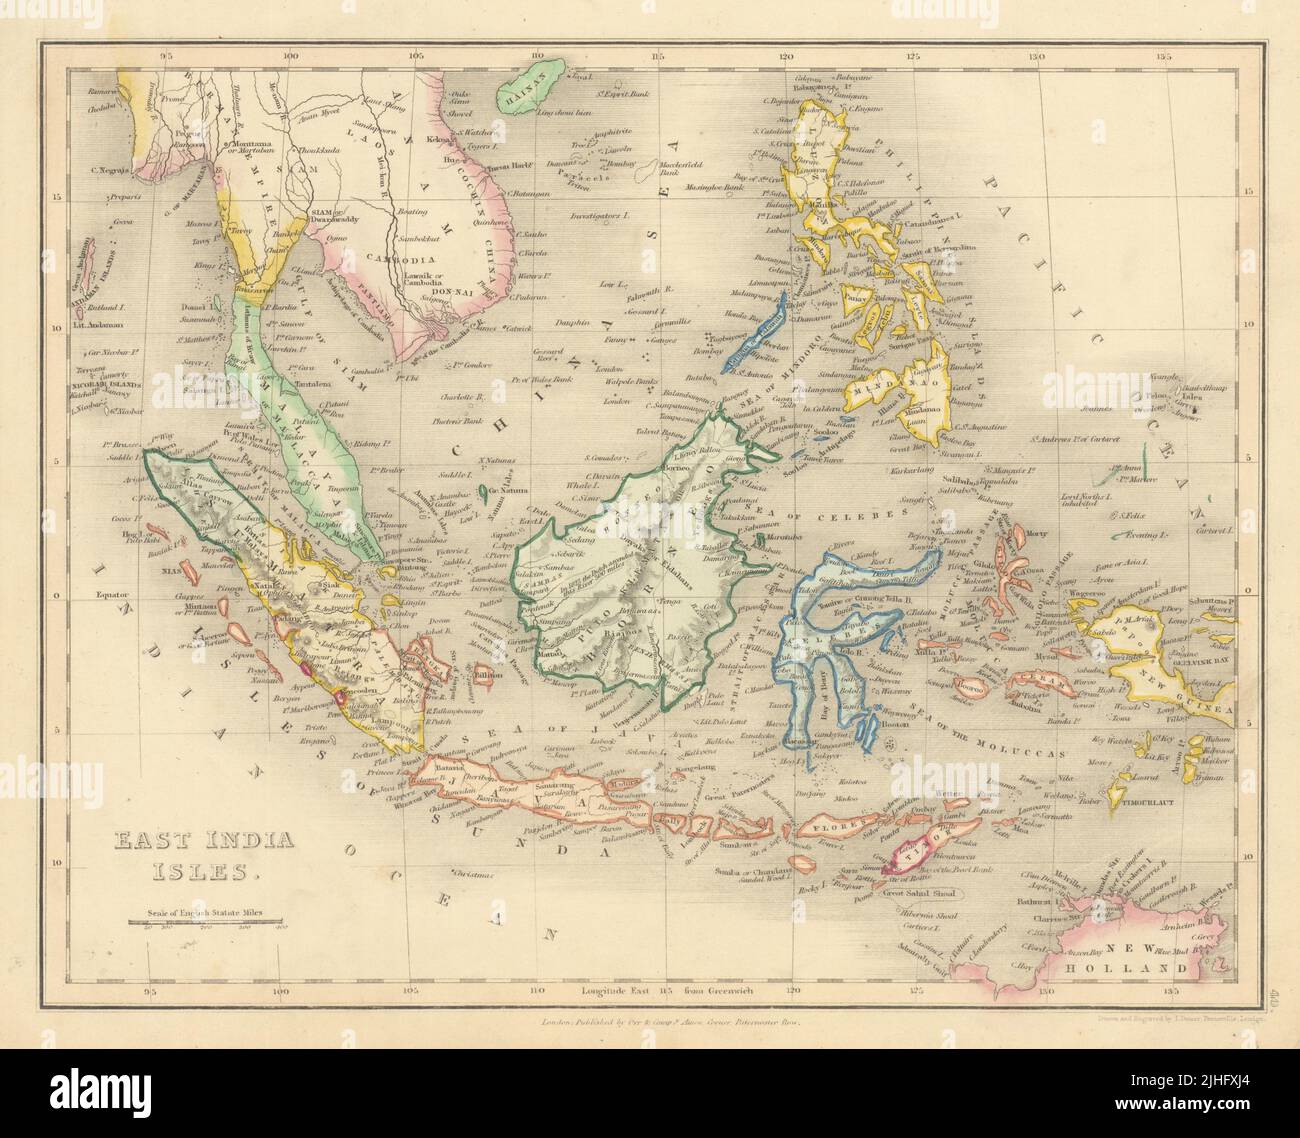 East India Isles von John Dower. Indonesien Philippinen Malaya 1845 alte Karte Stockfoto